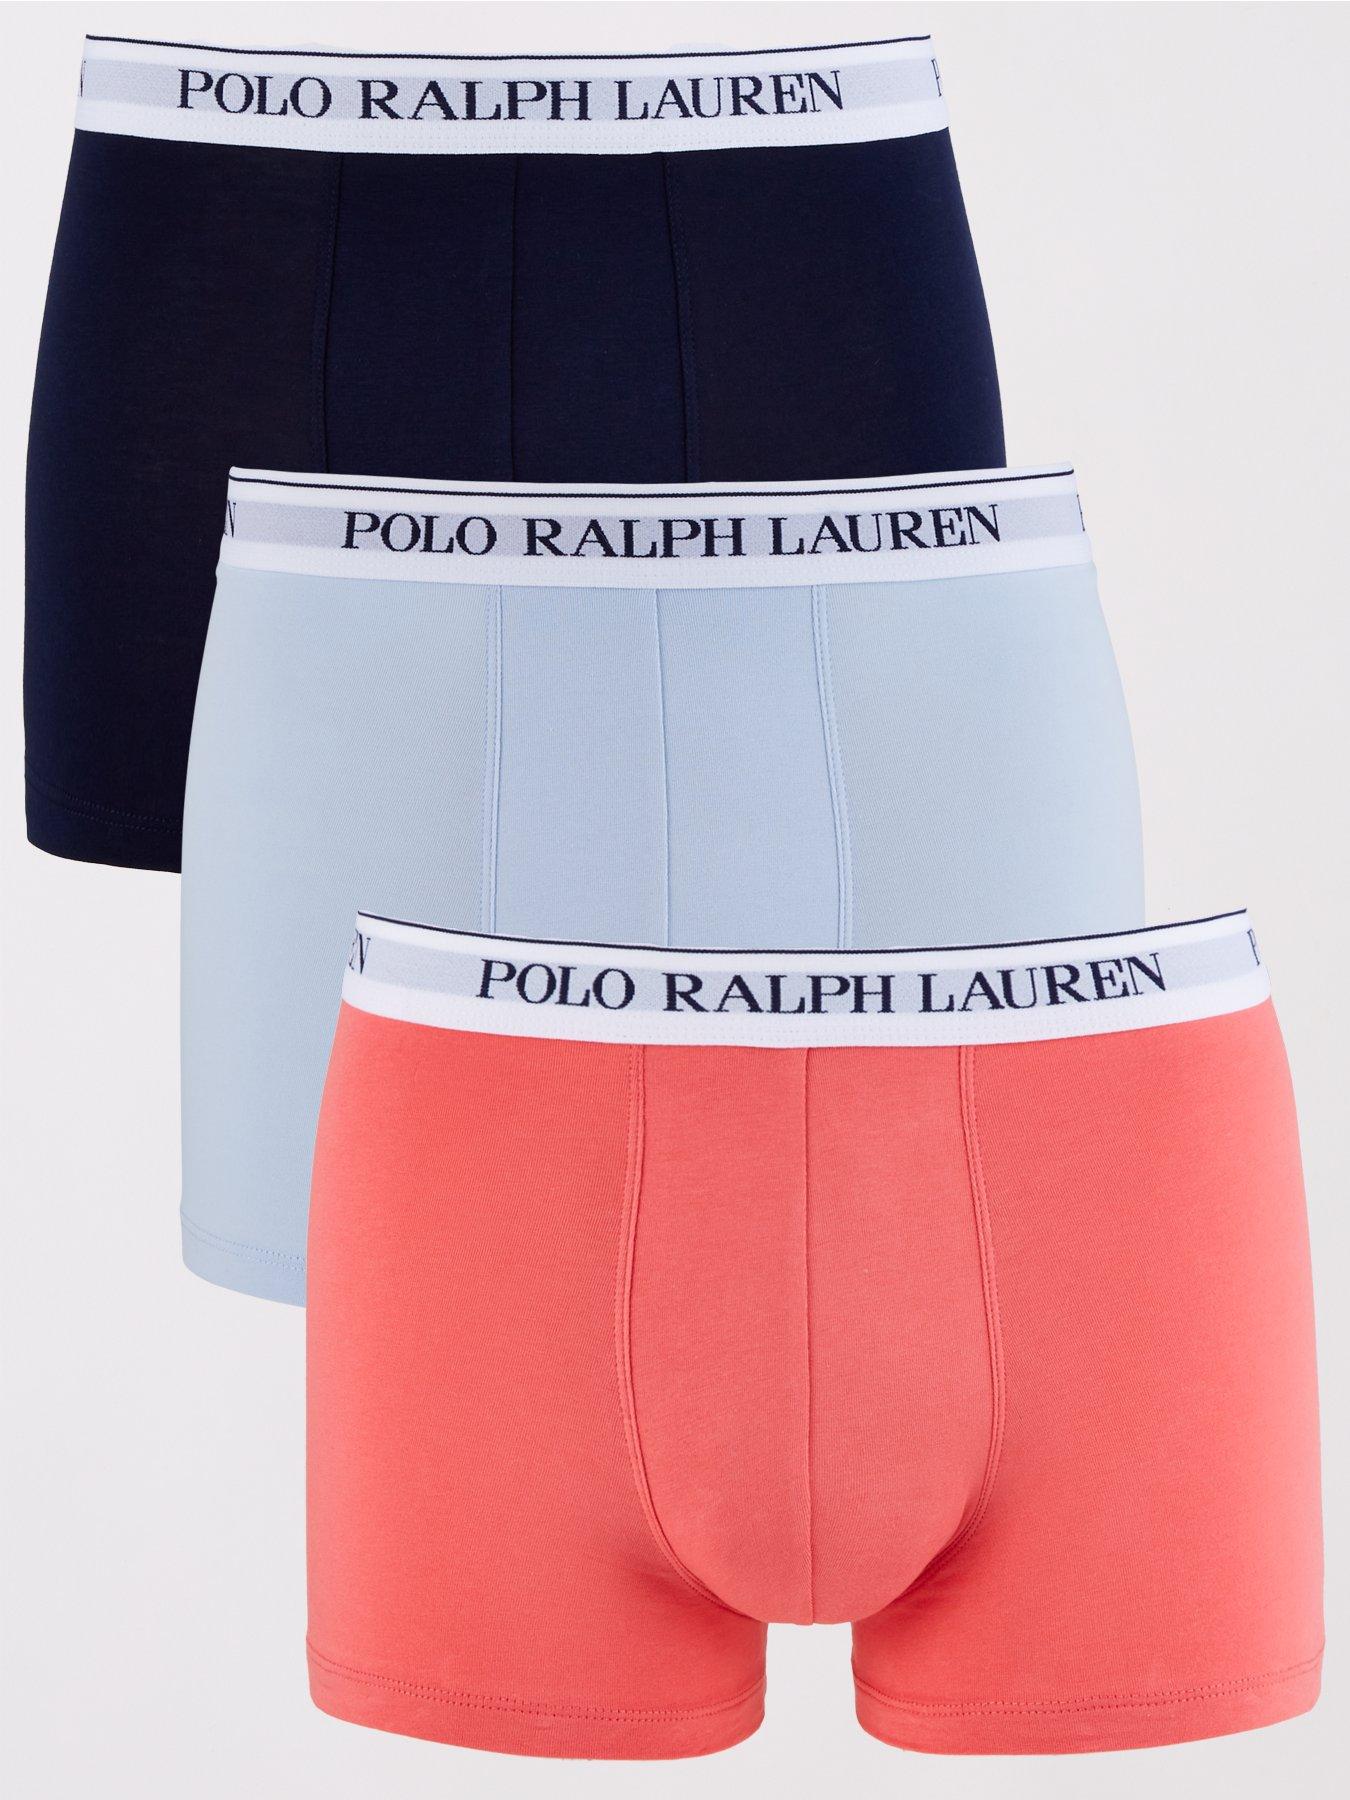 Order Polo Ralph Lauren Classic 3 Pack Trunk white/white/white